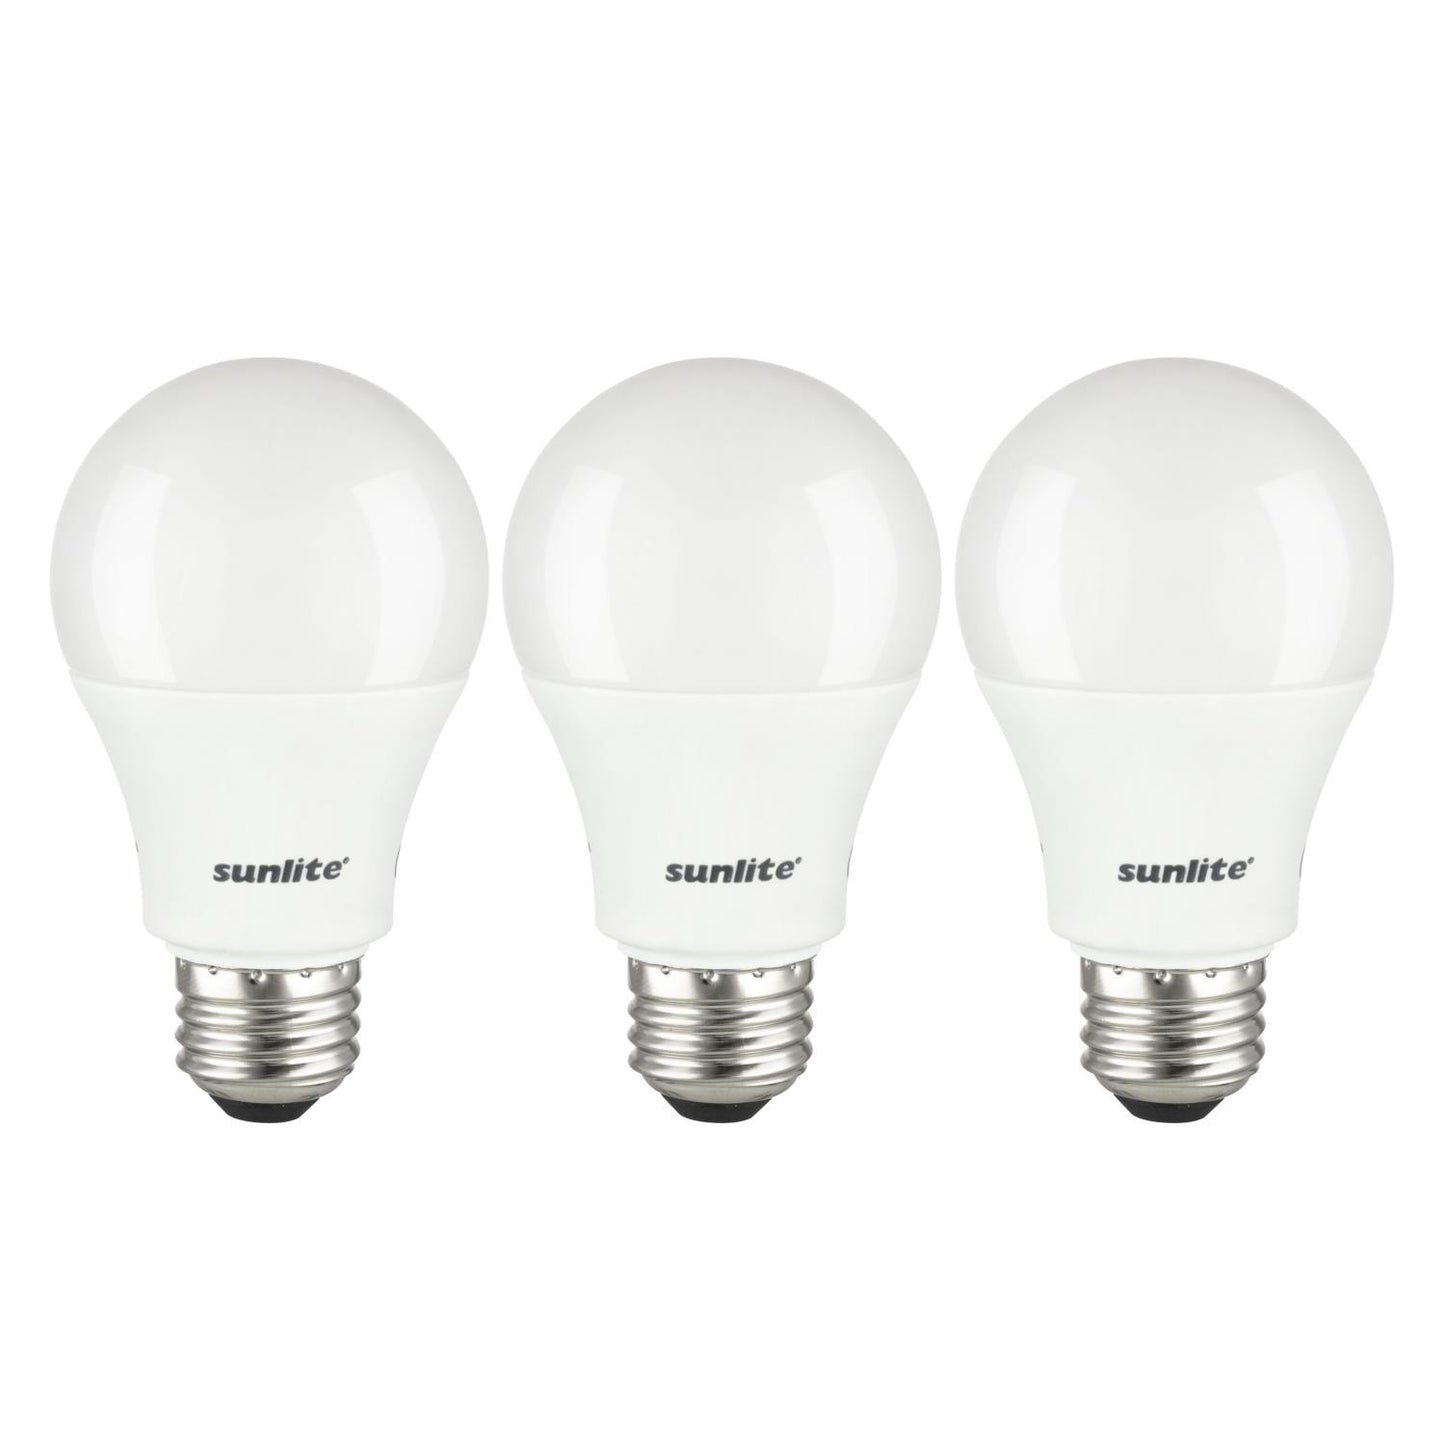 Sunlite A19/LED/12W/ES/D/50K LED A Type Household 12W (75W Equivalent) Light Bulbs Medium (E26) Base, Clear White